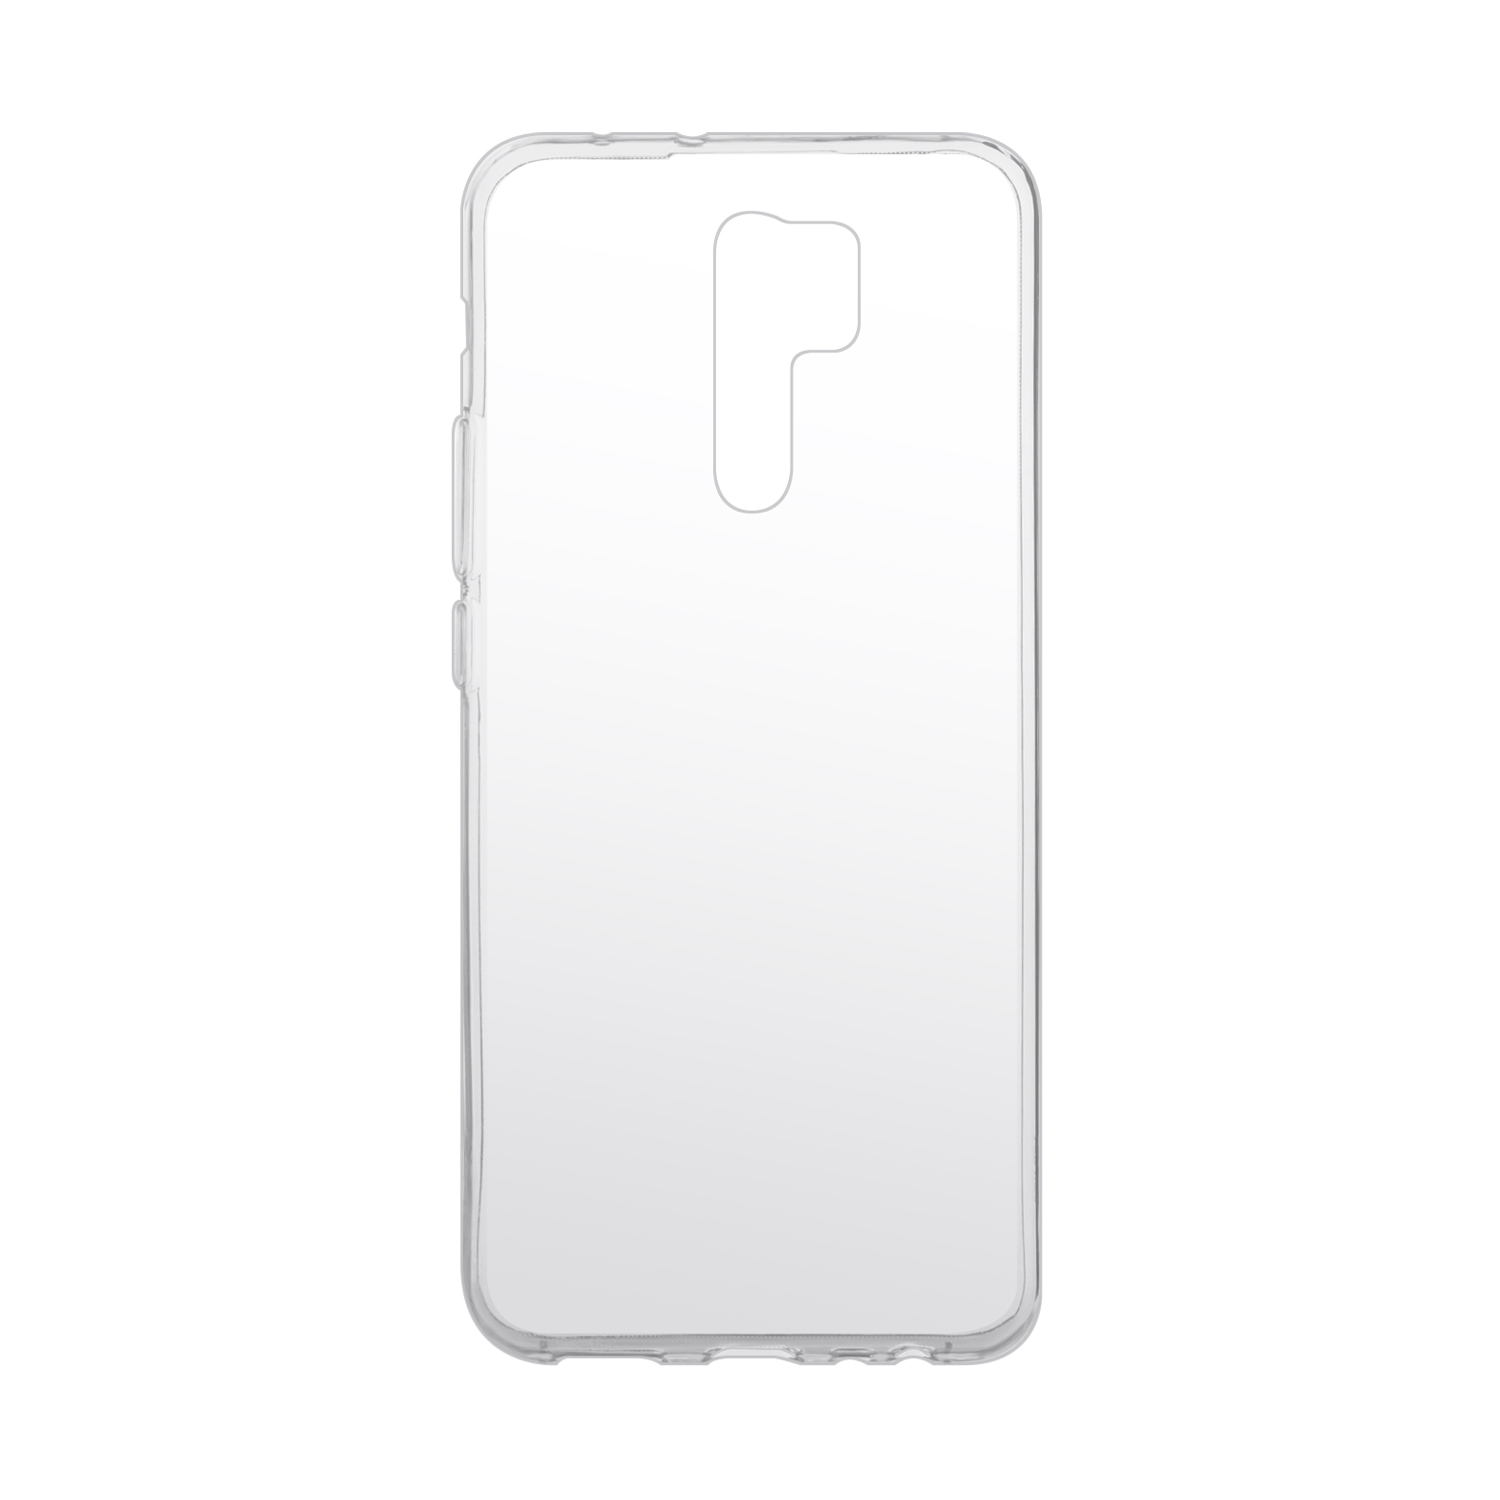 Чехол Xiaomi Redmi 9 TPU 1.0mm прозрачный (без обмена и возврата)